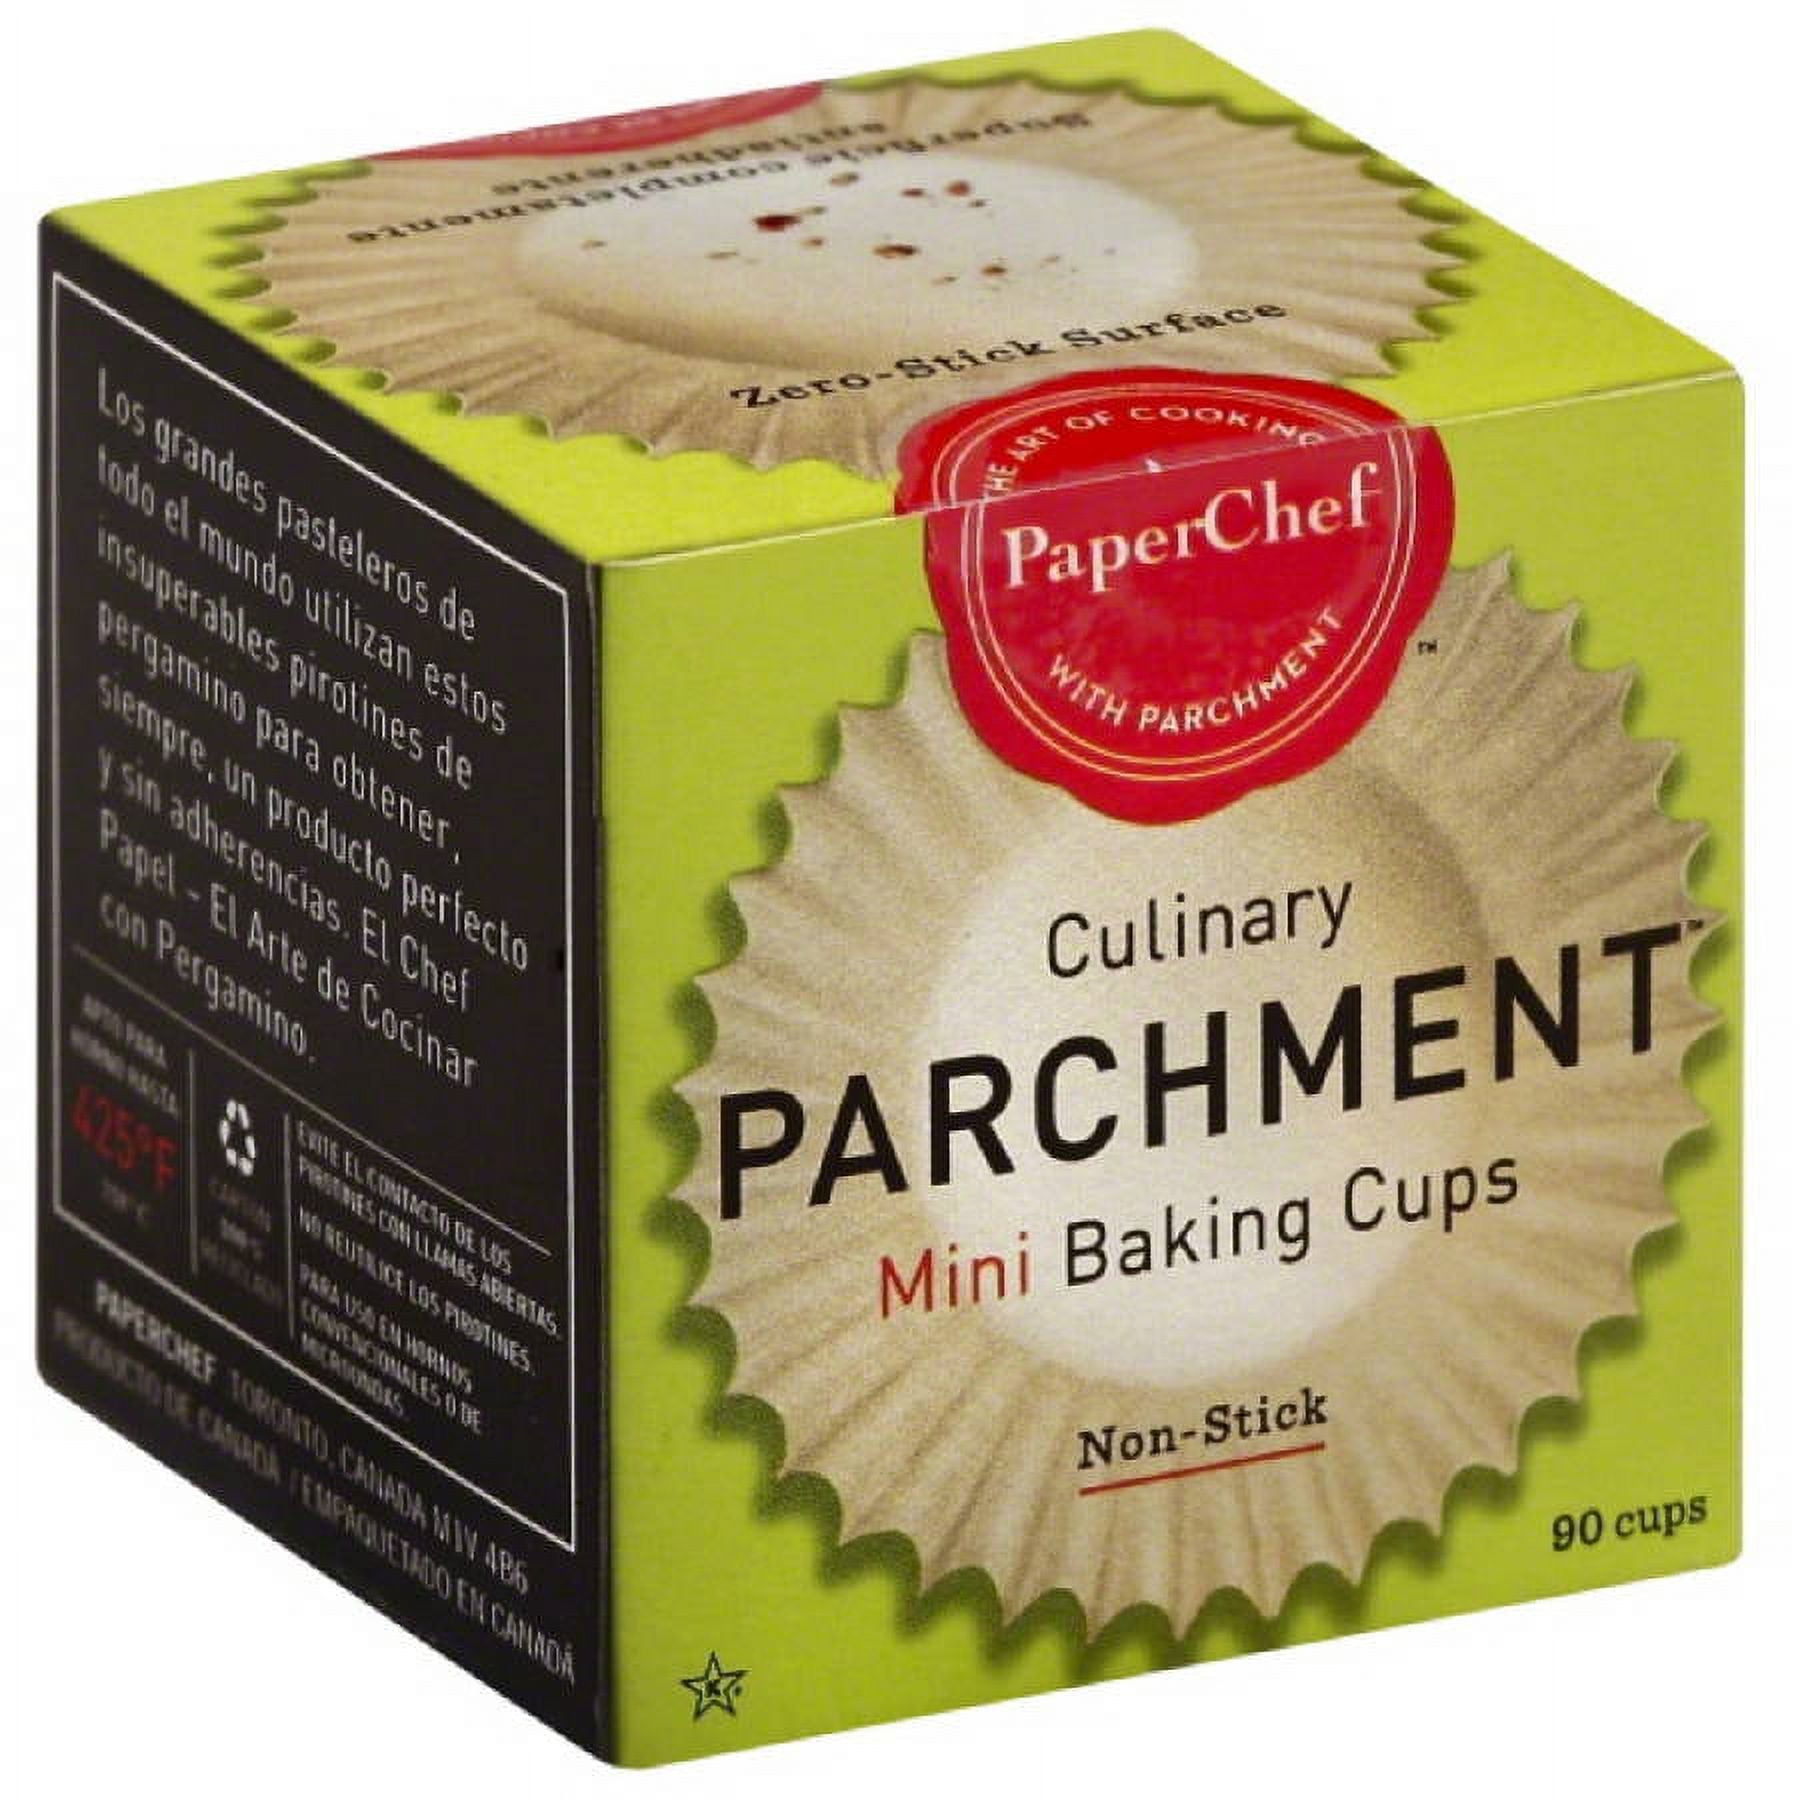 PaperChef Culinary Parchment Pre Cut Sheets, 24 ct